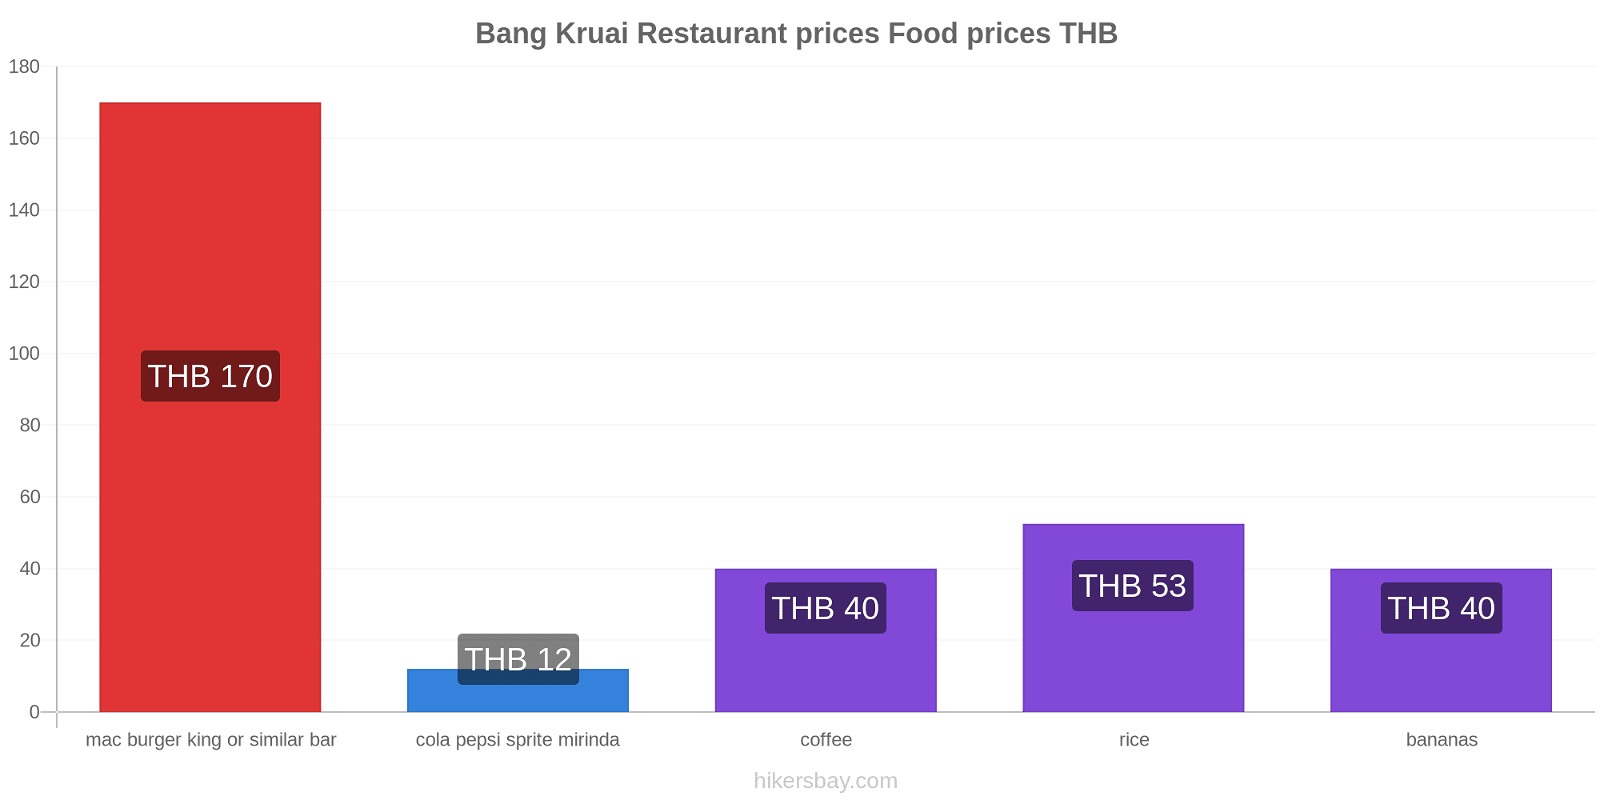 Bang Kruai price changes hikersbay.com